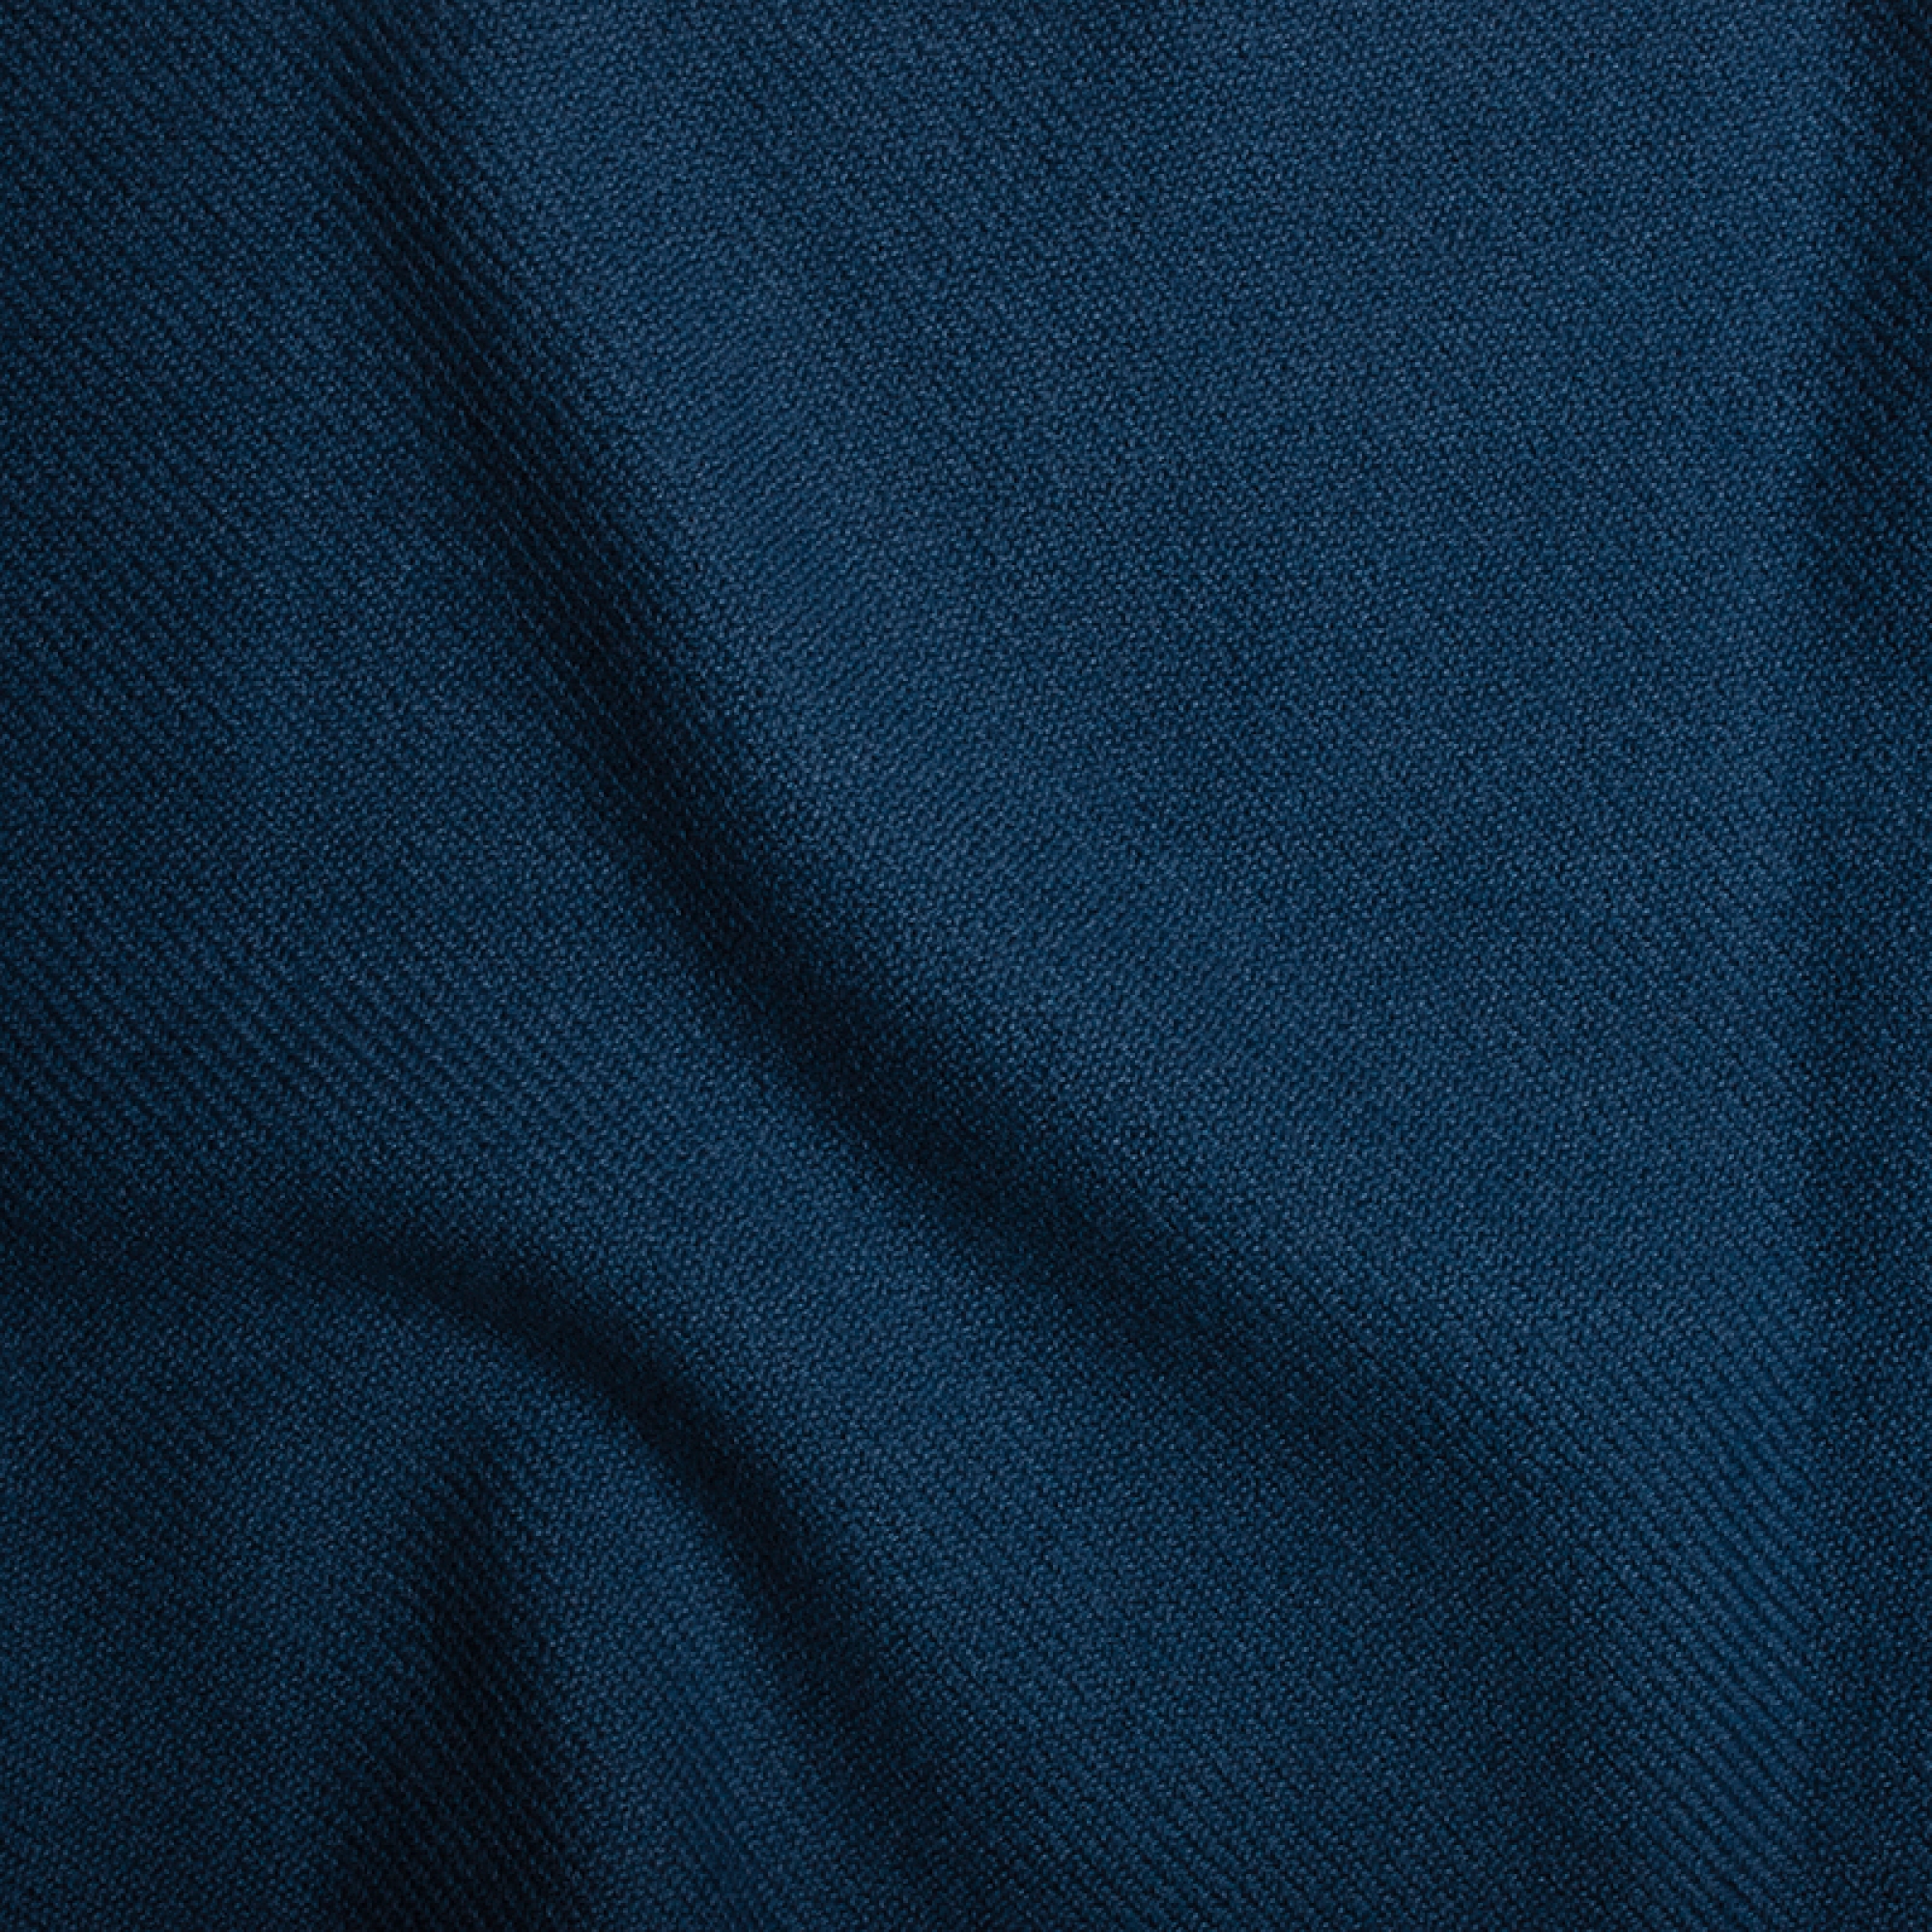 Cachemire pull homme toodoo plain m 180 x 220 bleu prusse 180 x 220 cm